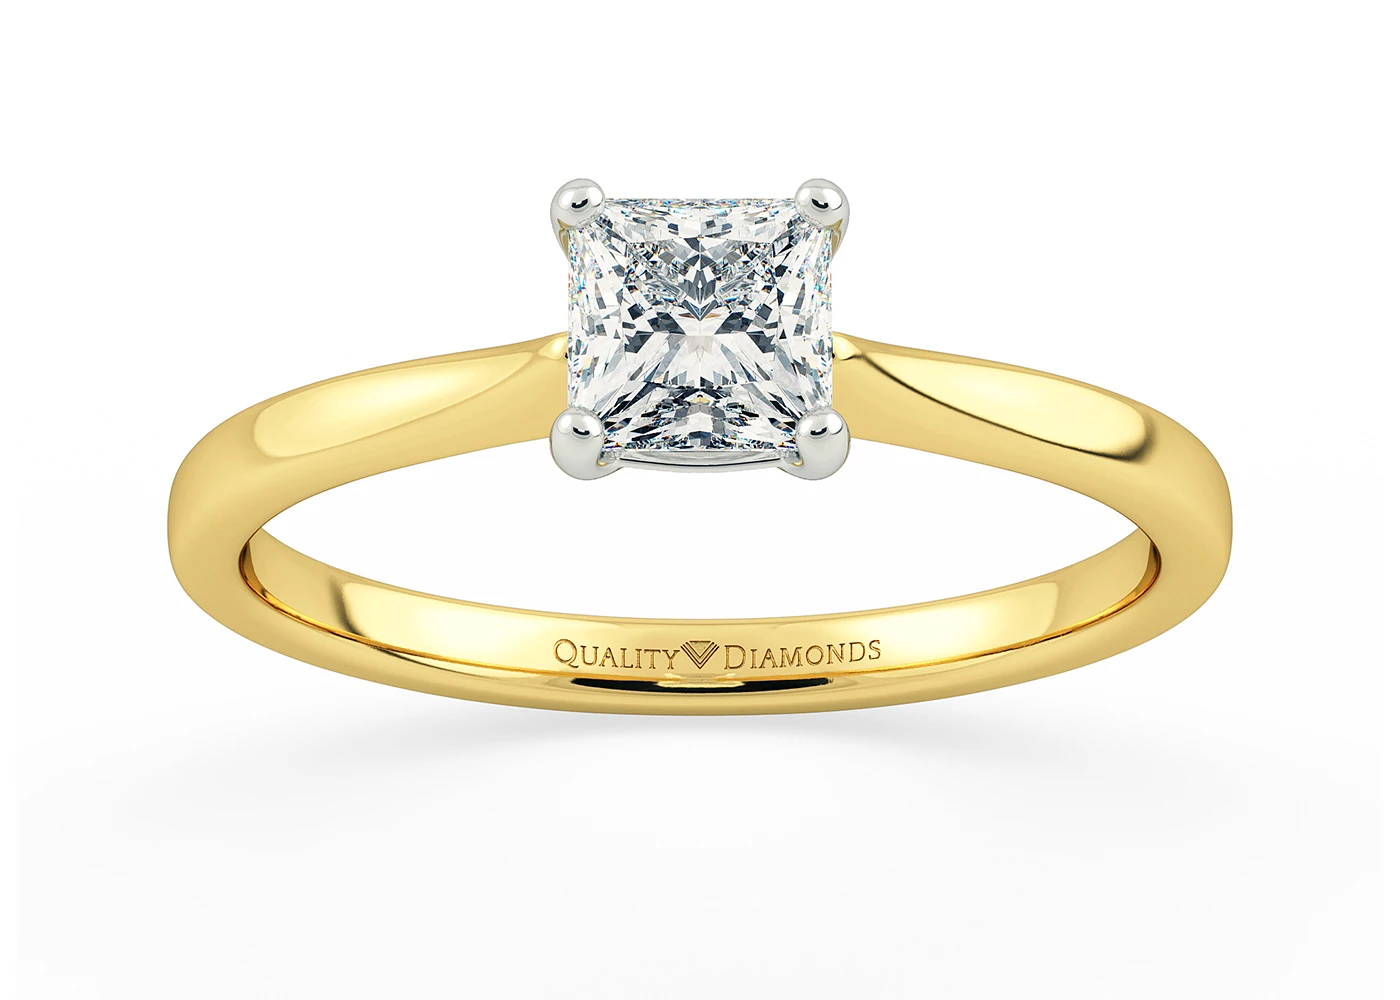 Princess Nara Diamond Ring in 9K Yellow Gold